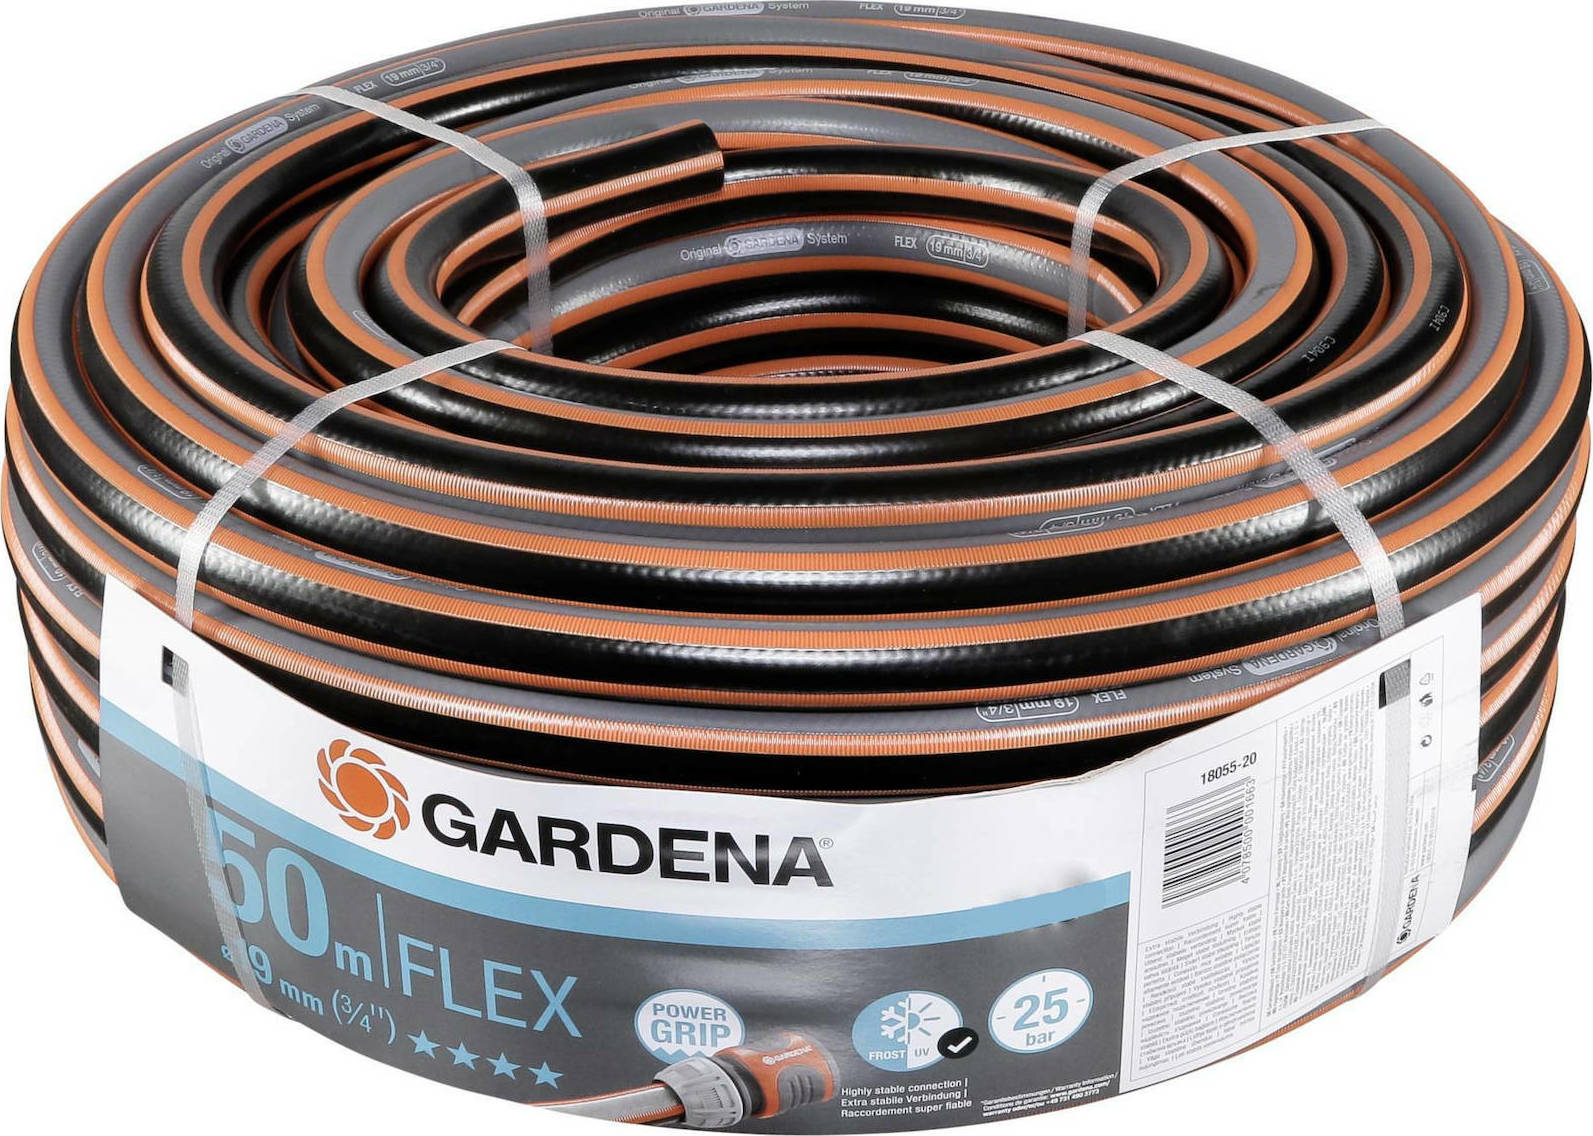 Gardena Λάστιχο Ποτίσματος Flex Comfort 3/4" 50m 18055-20